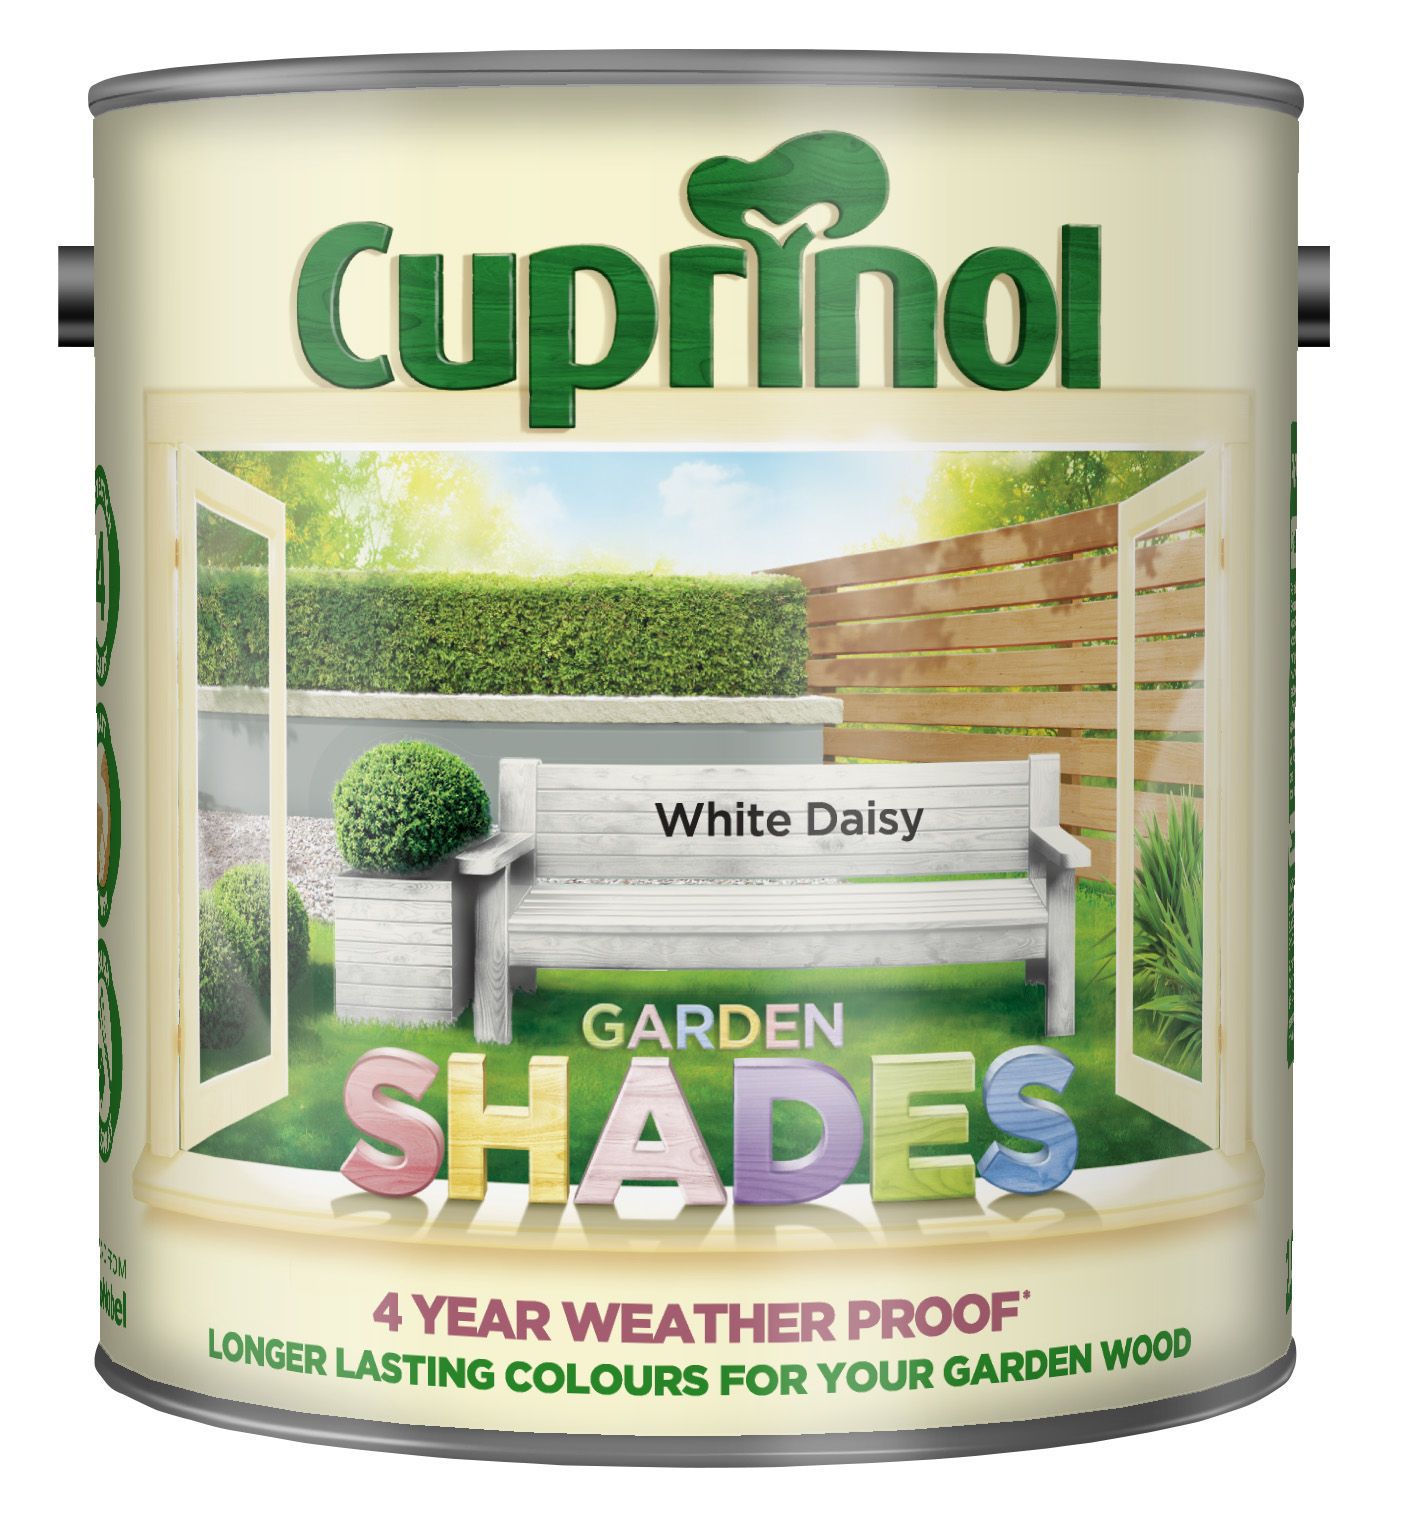 Cuprinol Garden shades White daisy Matt Multi-surface Exterior Wood paint, 2.5L